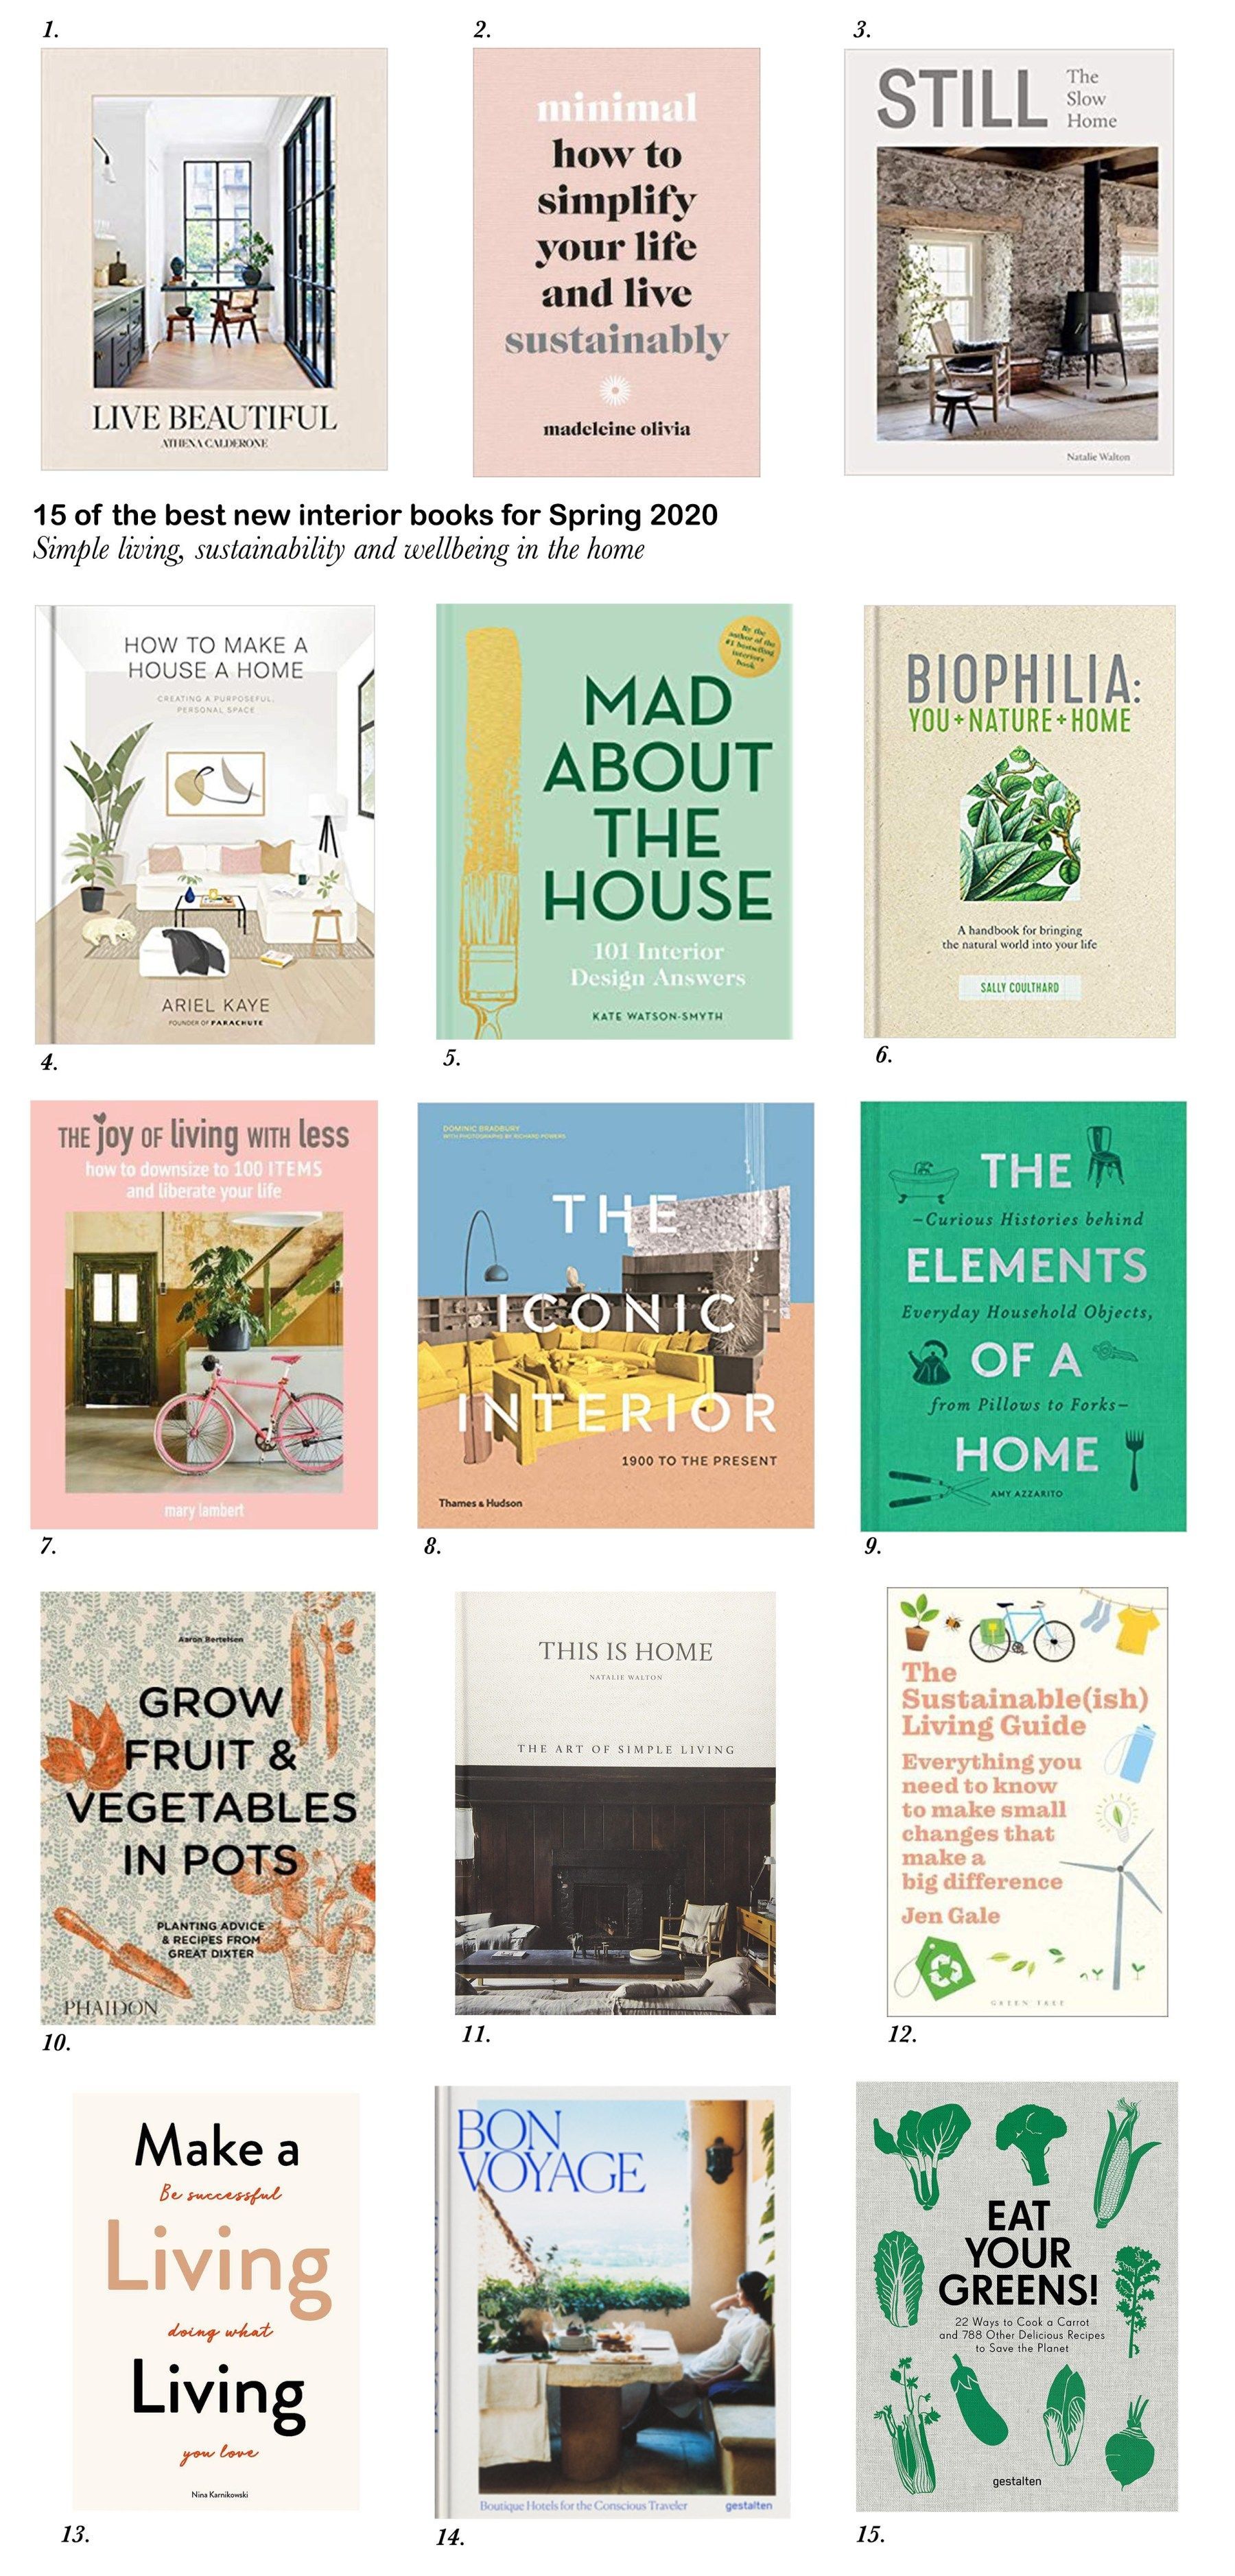 15 new interior design books for the simple, conscious home - 15 new interior design books for the simple, conscious home -   19 style Guides book ideas